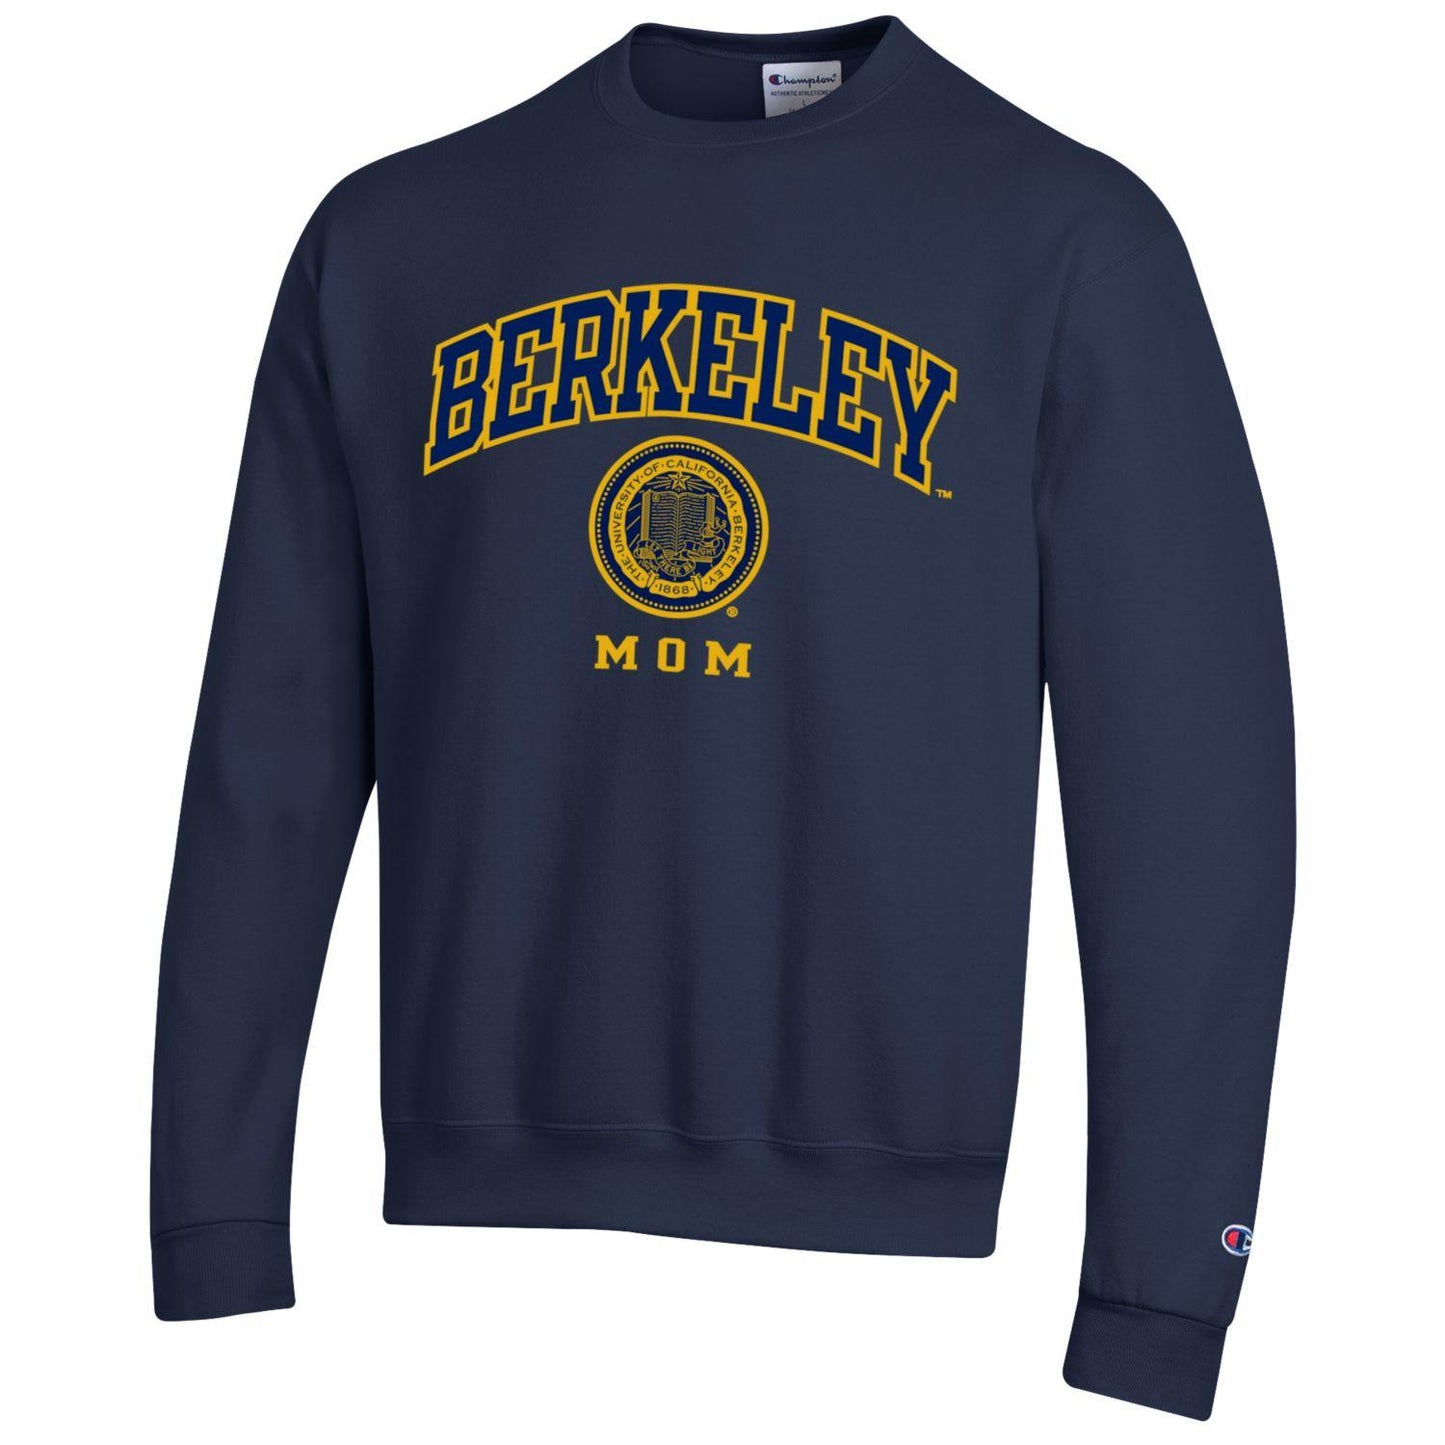 U.C. Berkeley Mom arch & seal double applique Versa Twill Champion crew-neck sweatshirt-Navy-Shop College Wear